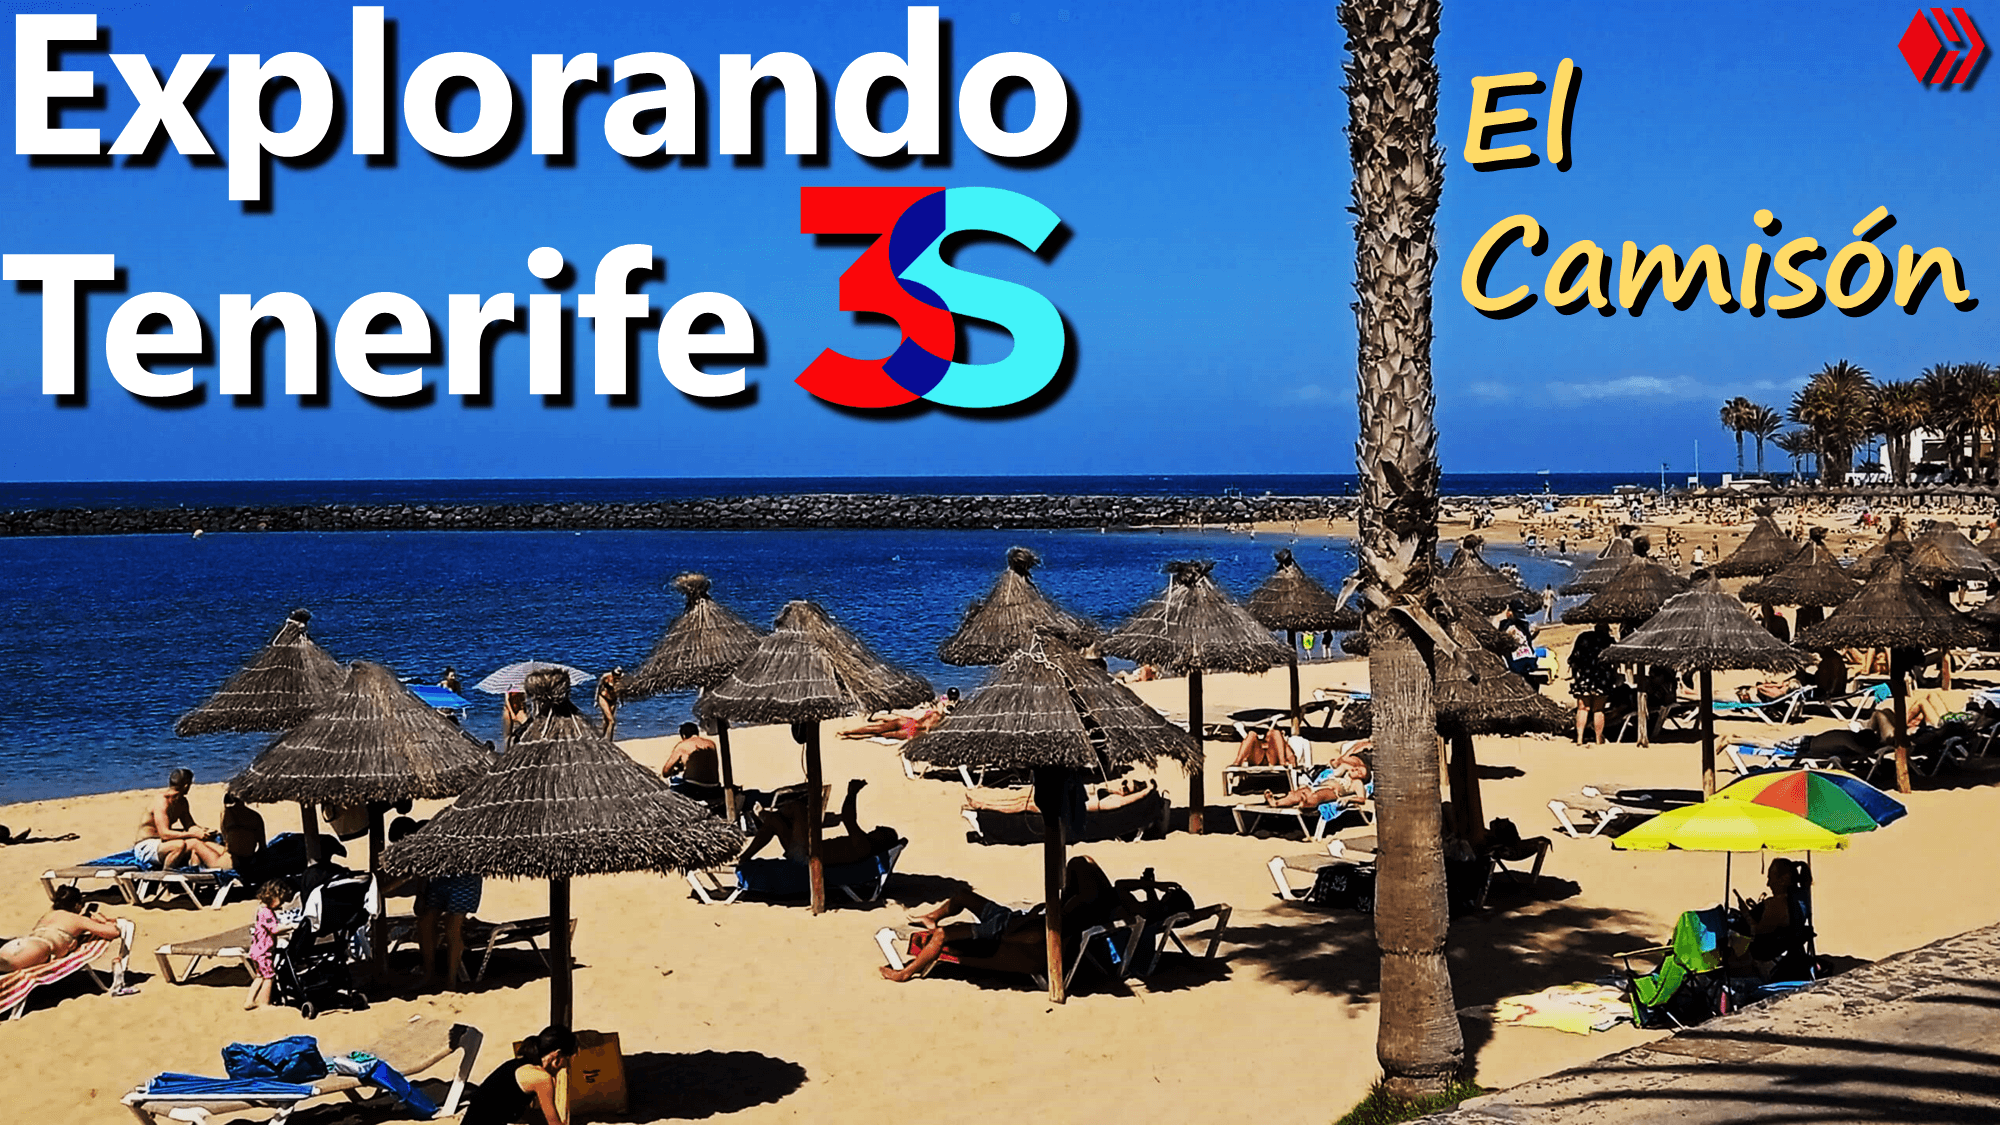 EXPLORANDO TENERIFE Playa El Camisón Beach acont Hive EspaVlog 3Speak.png